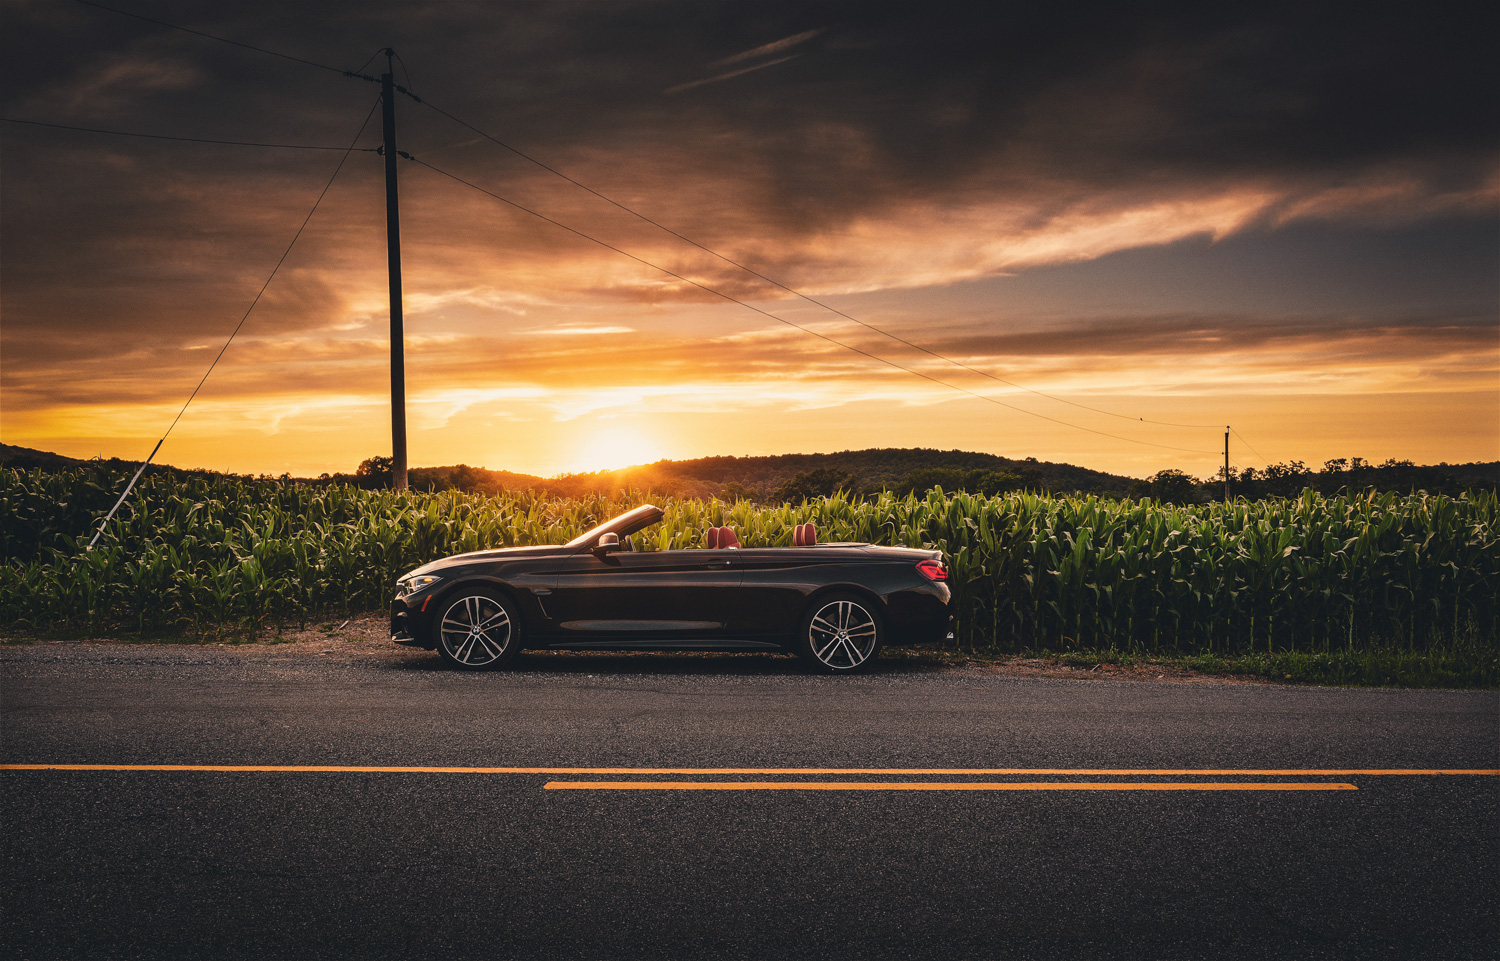 BMW 440i Convertible at sunset